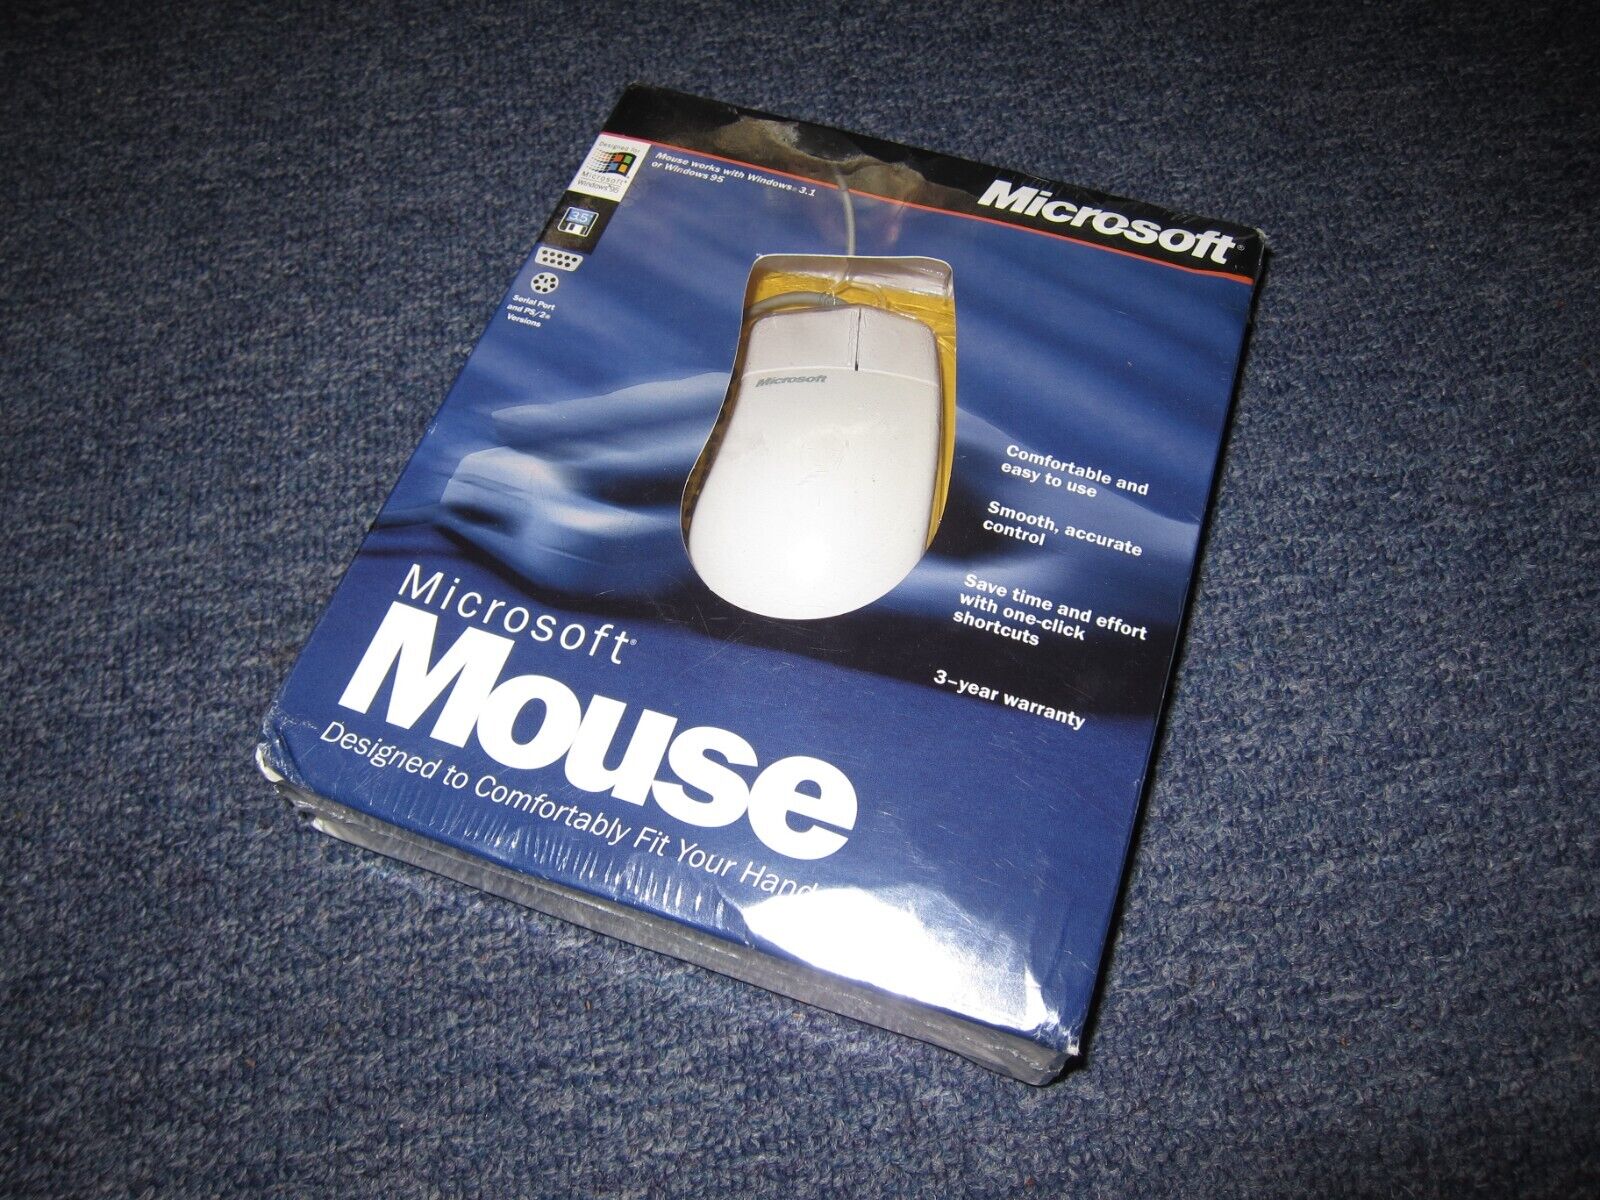 VINTAGE Microsoft Windows 95/3.1 PC Computer Mouse Rare NEW SEALED